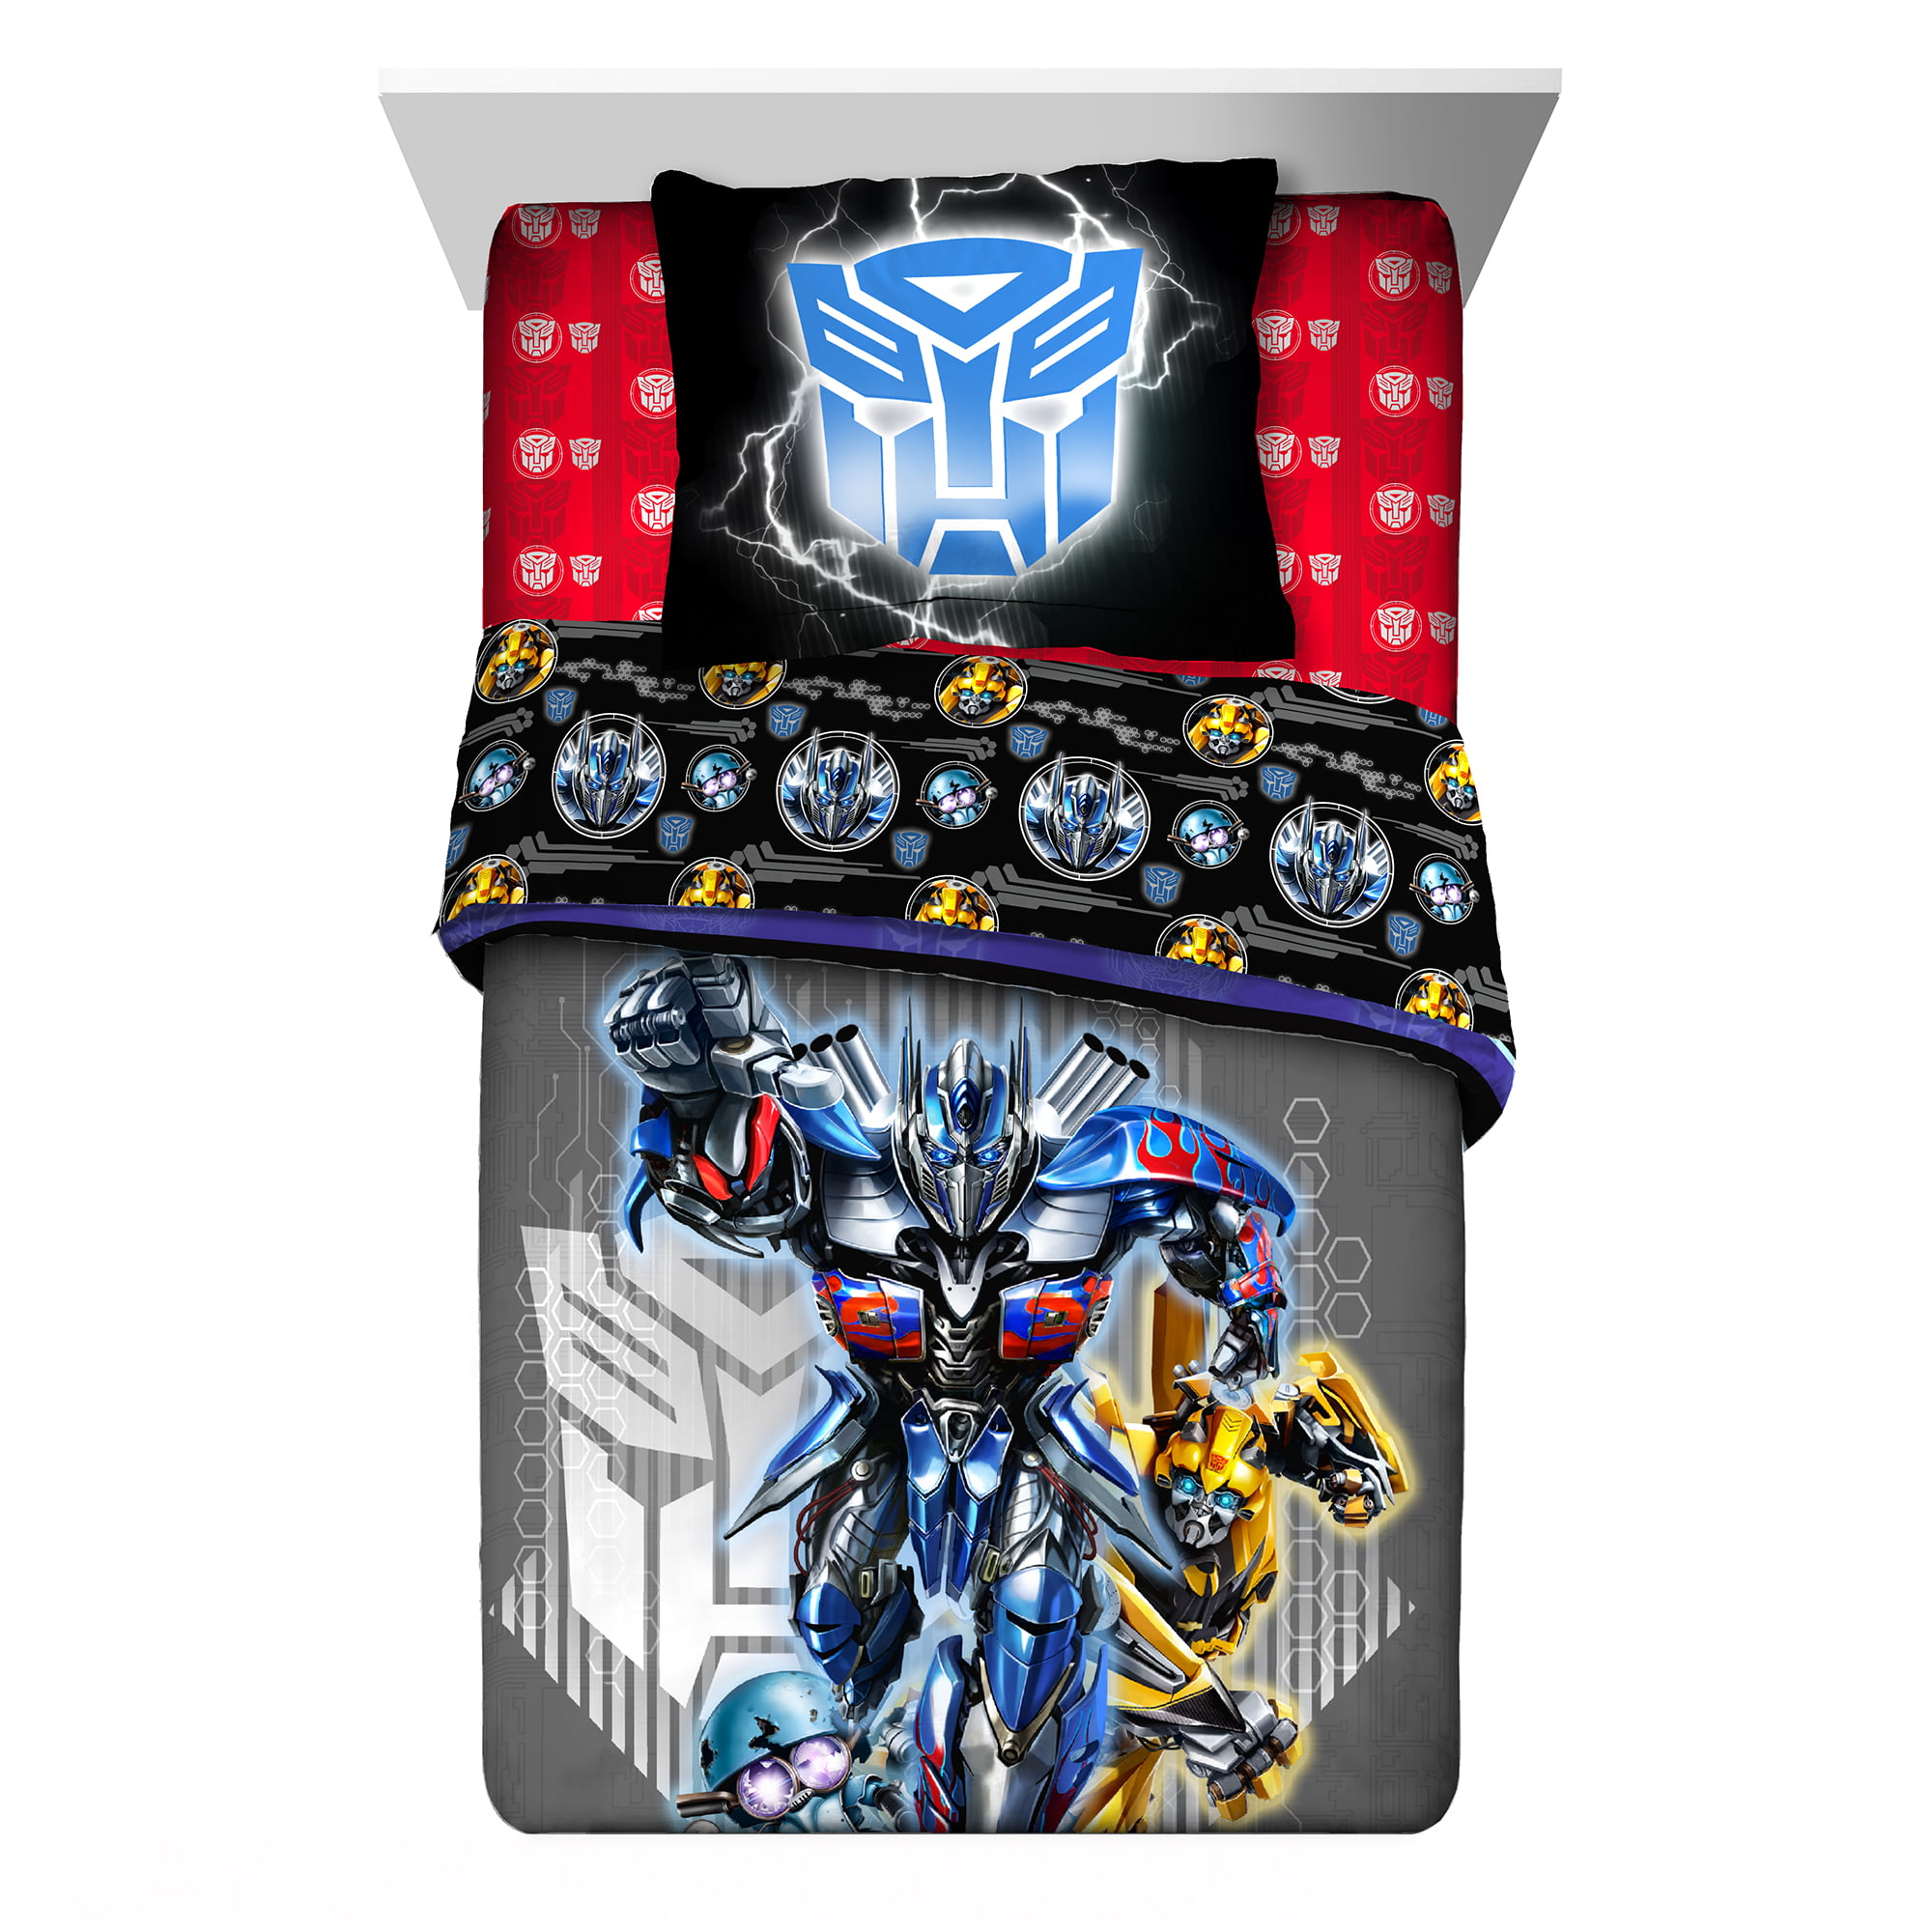 Transformers Kids Bedding Comforter Sham Set 2 Piece Walmart